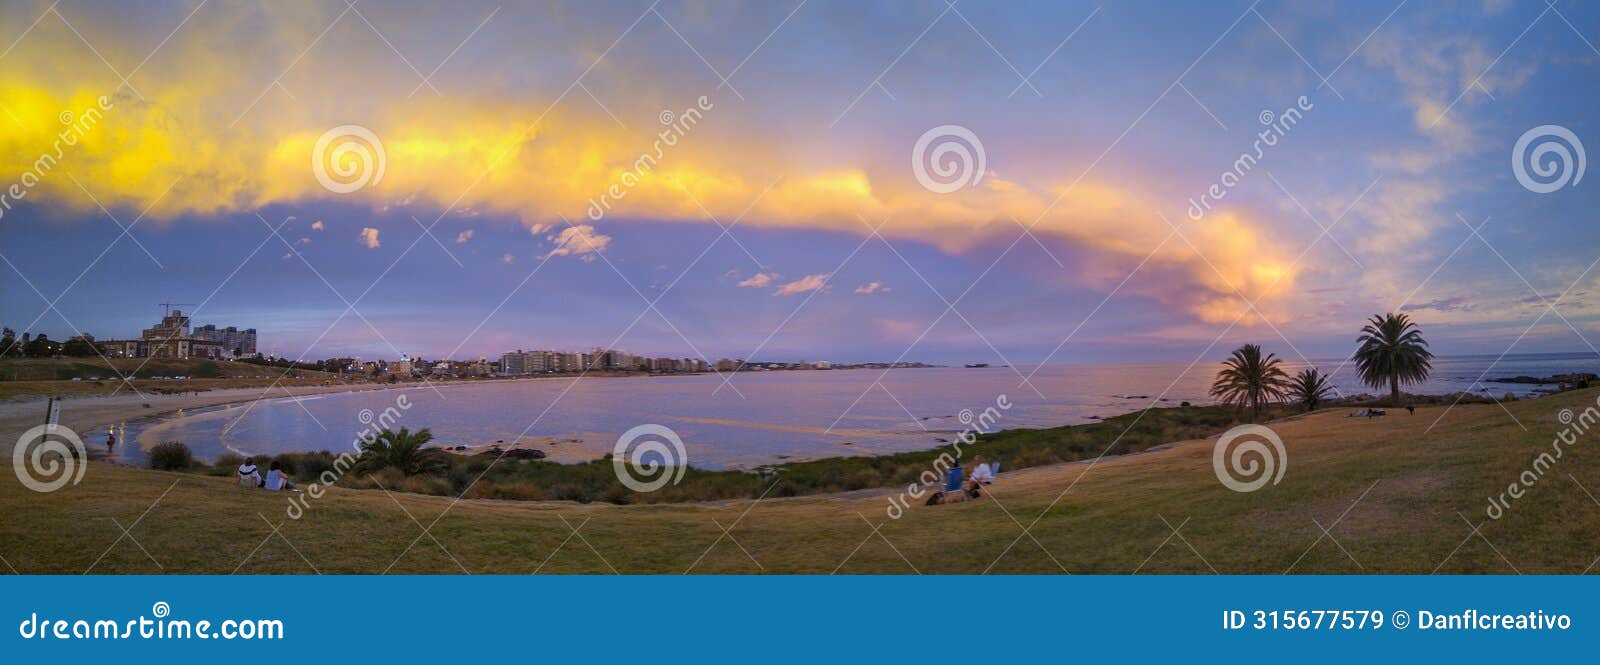 buceo beach, montevideo city, uruguay